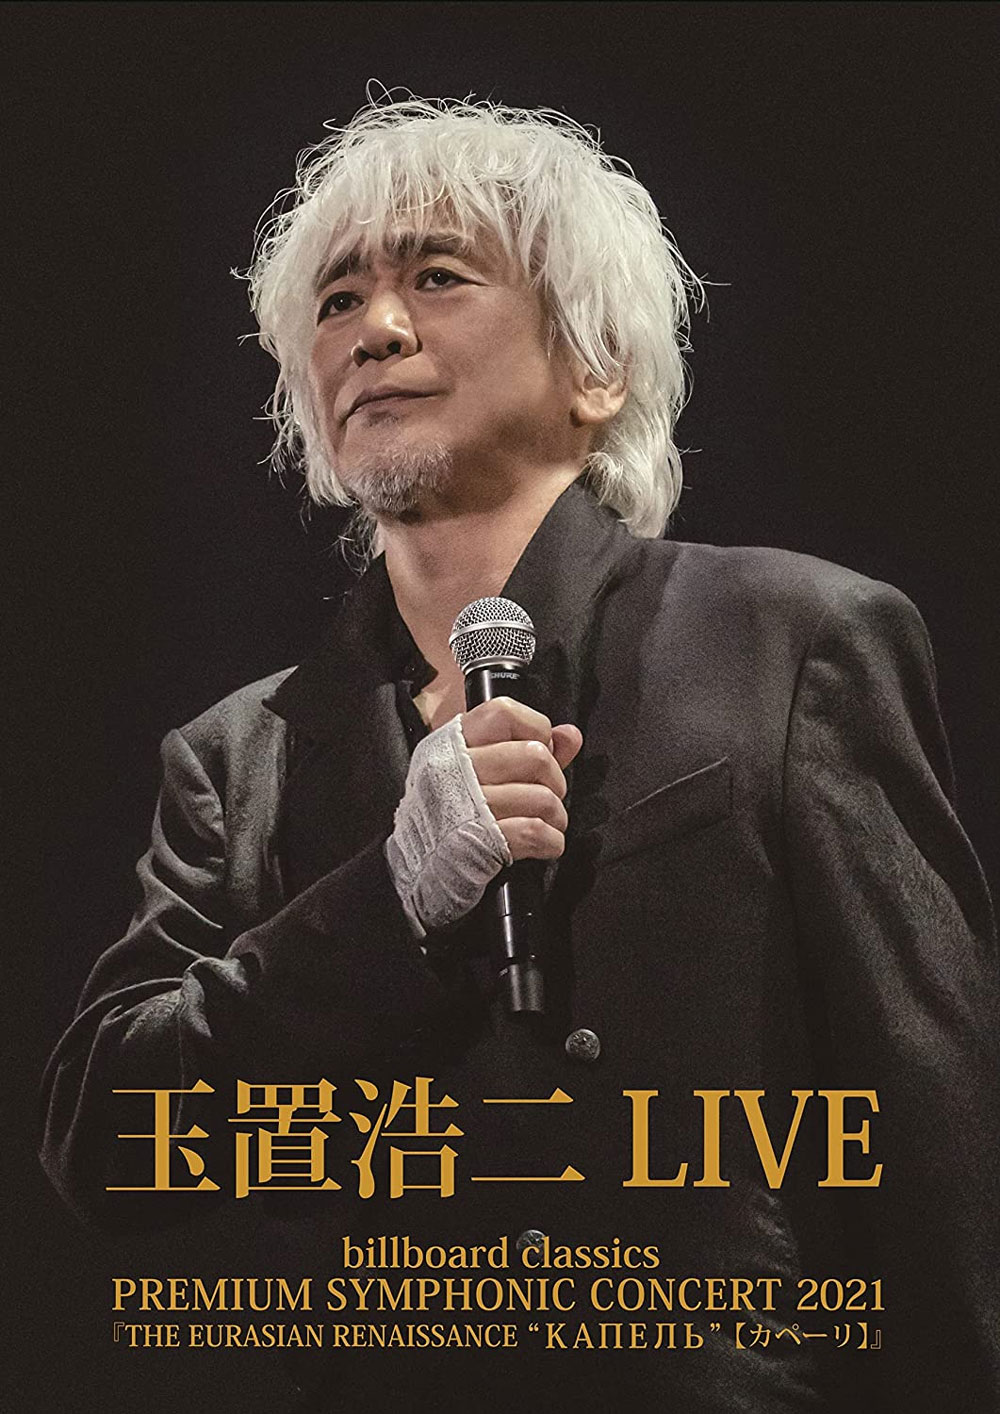 玉置浩二Koji Tamaki LIVE: billboard classics ~PREMIUM SYMPHONIC